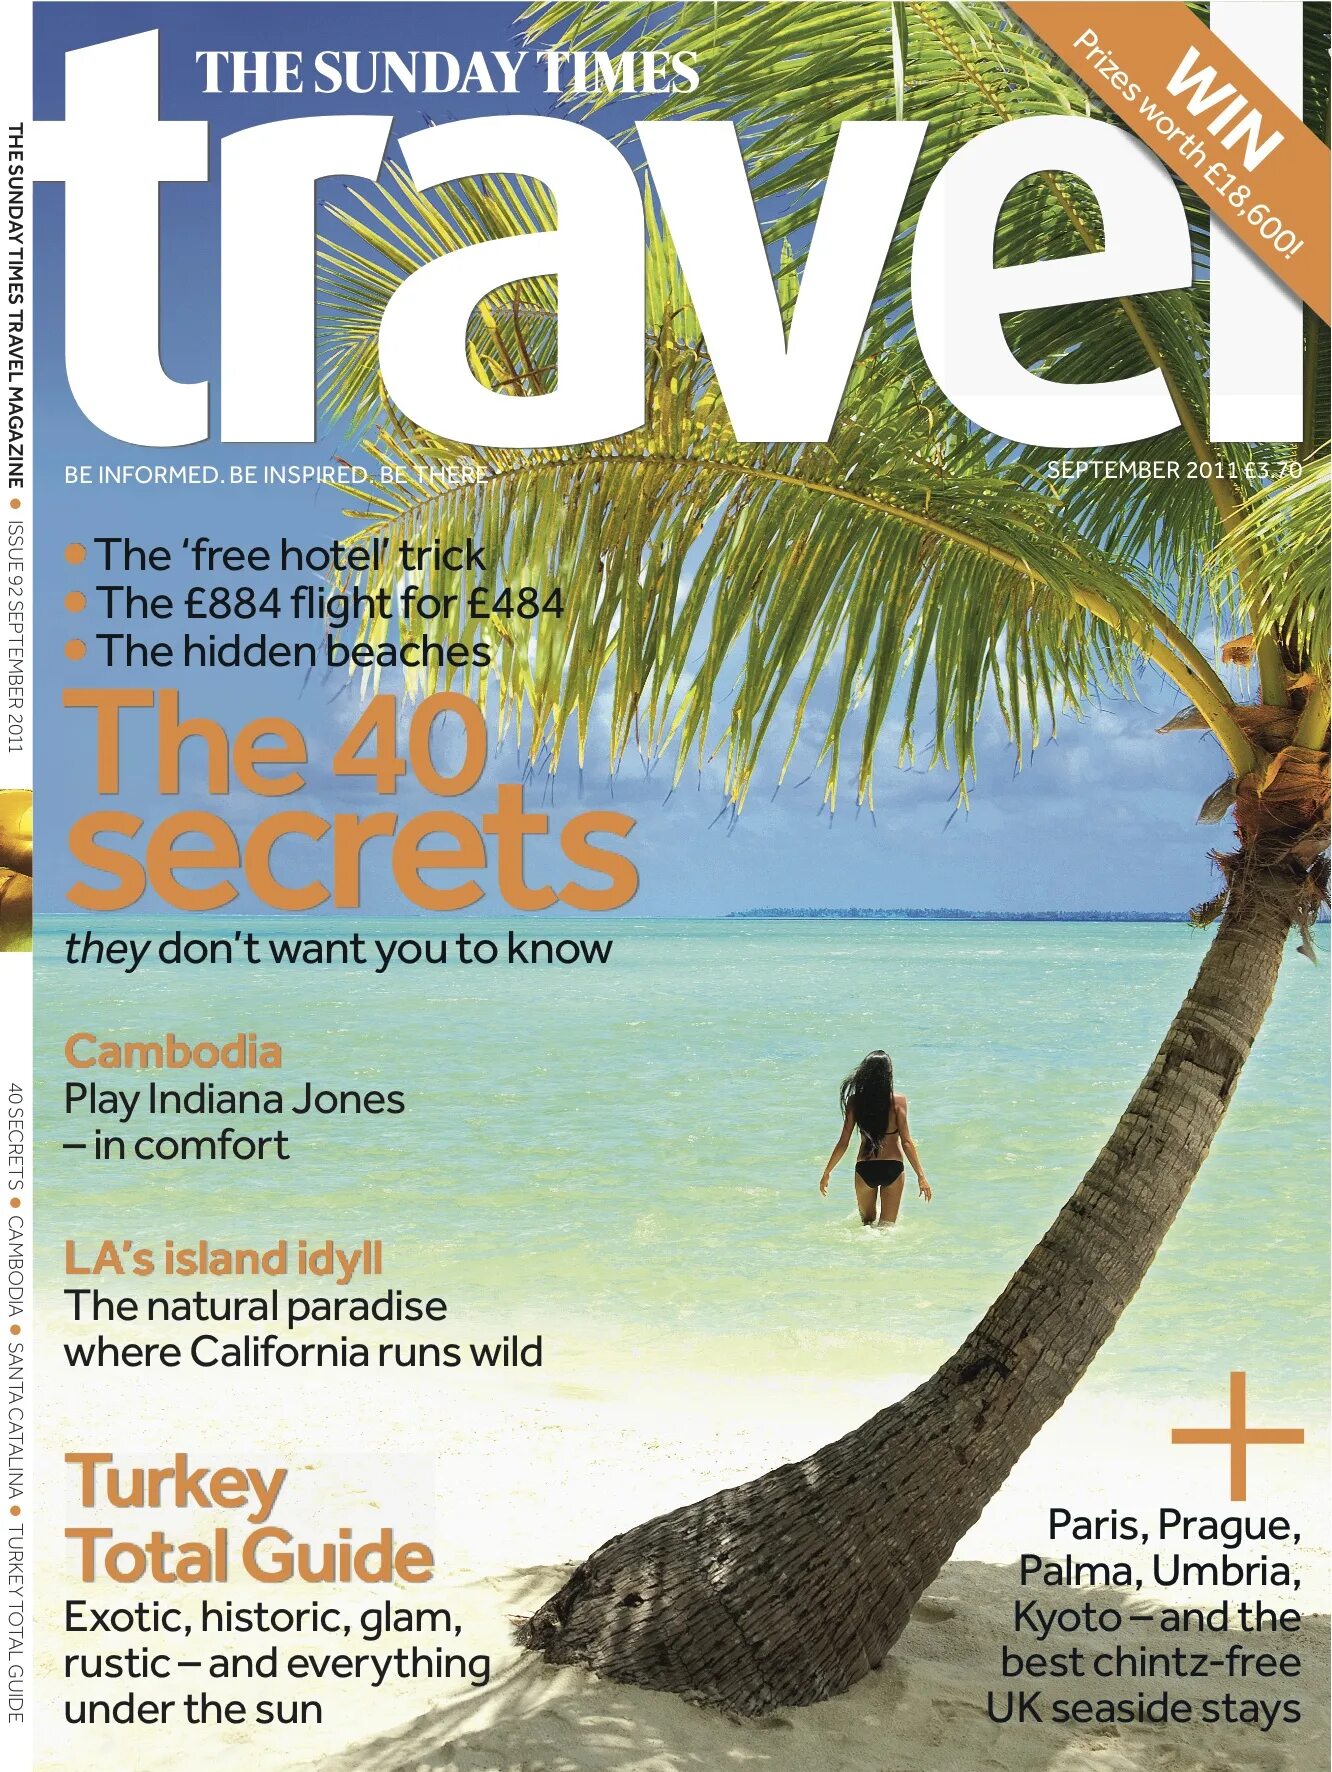 Журнал о путешествиях. Travel журналы. Travel Magazine обложка. Журнал туризм. Traveling magazine